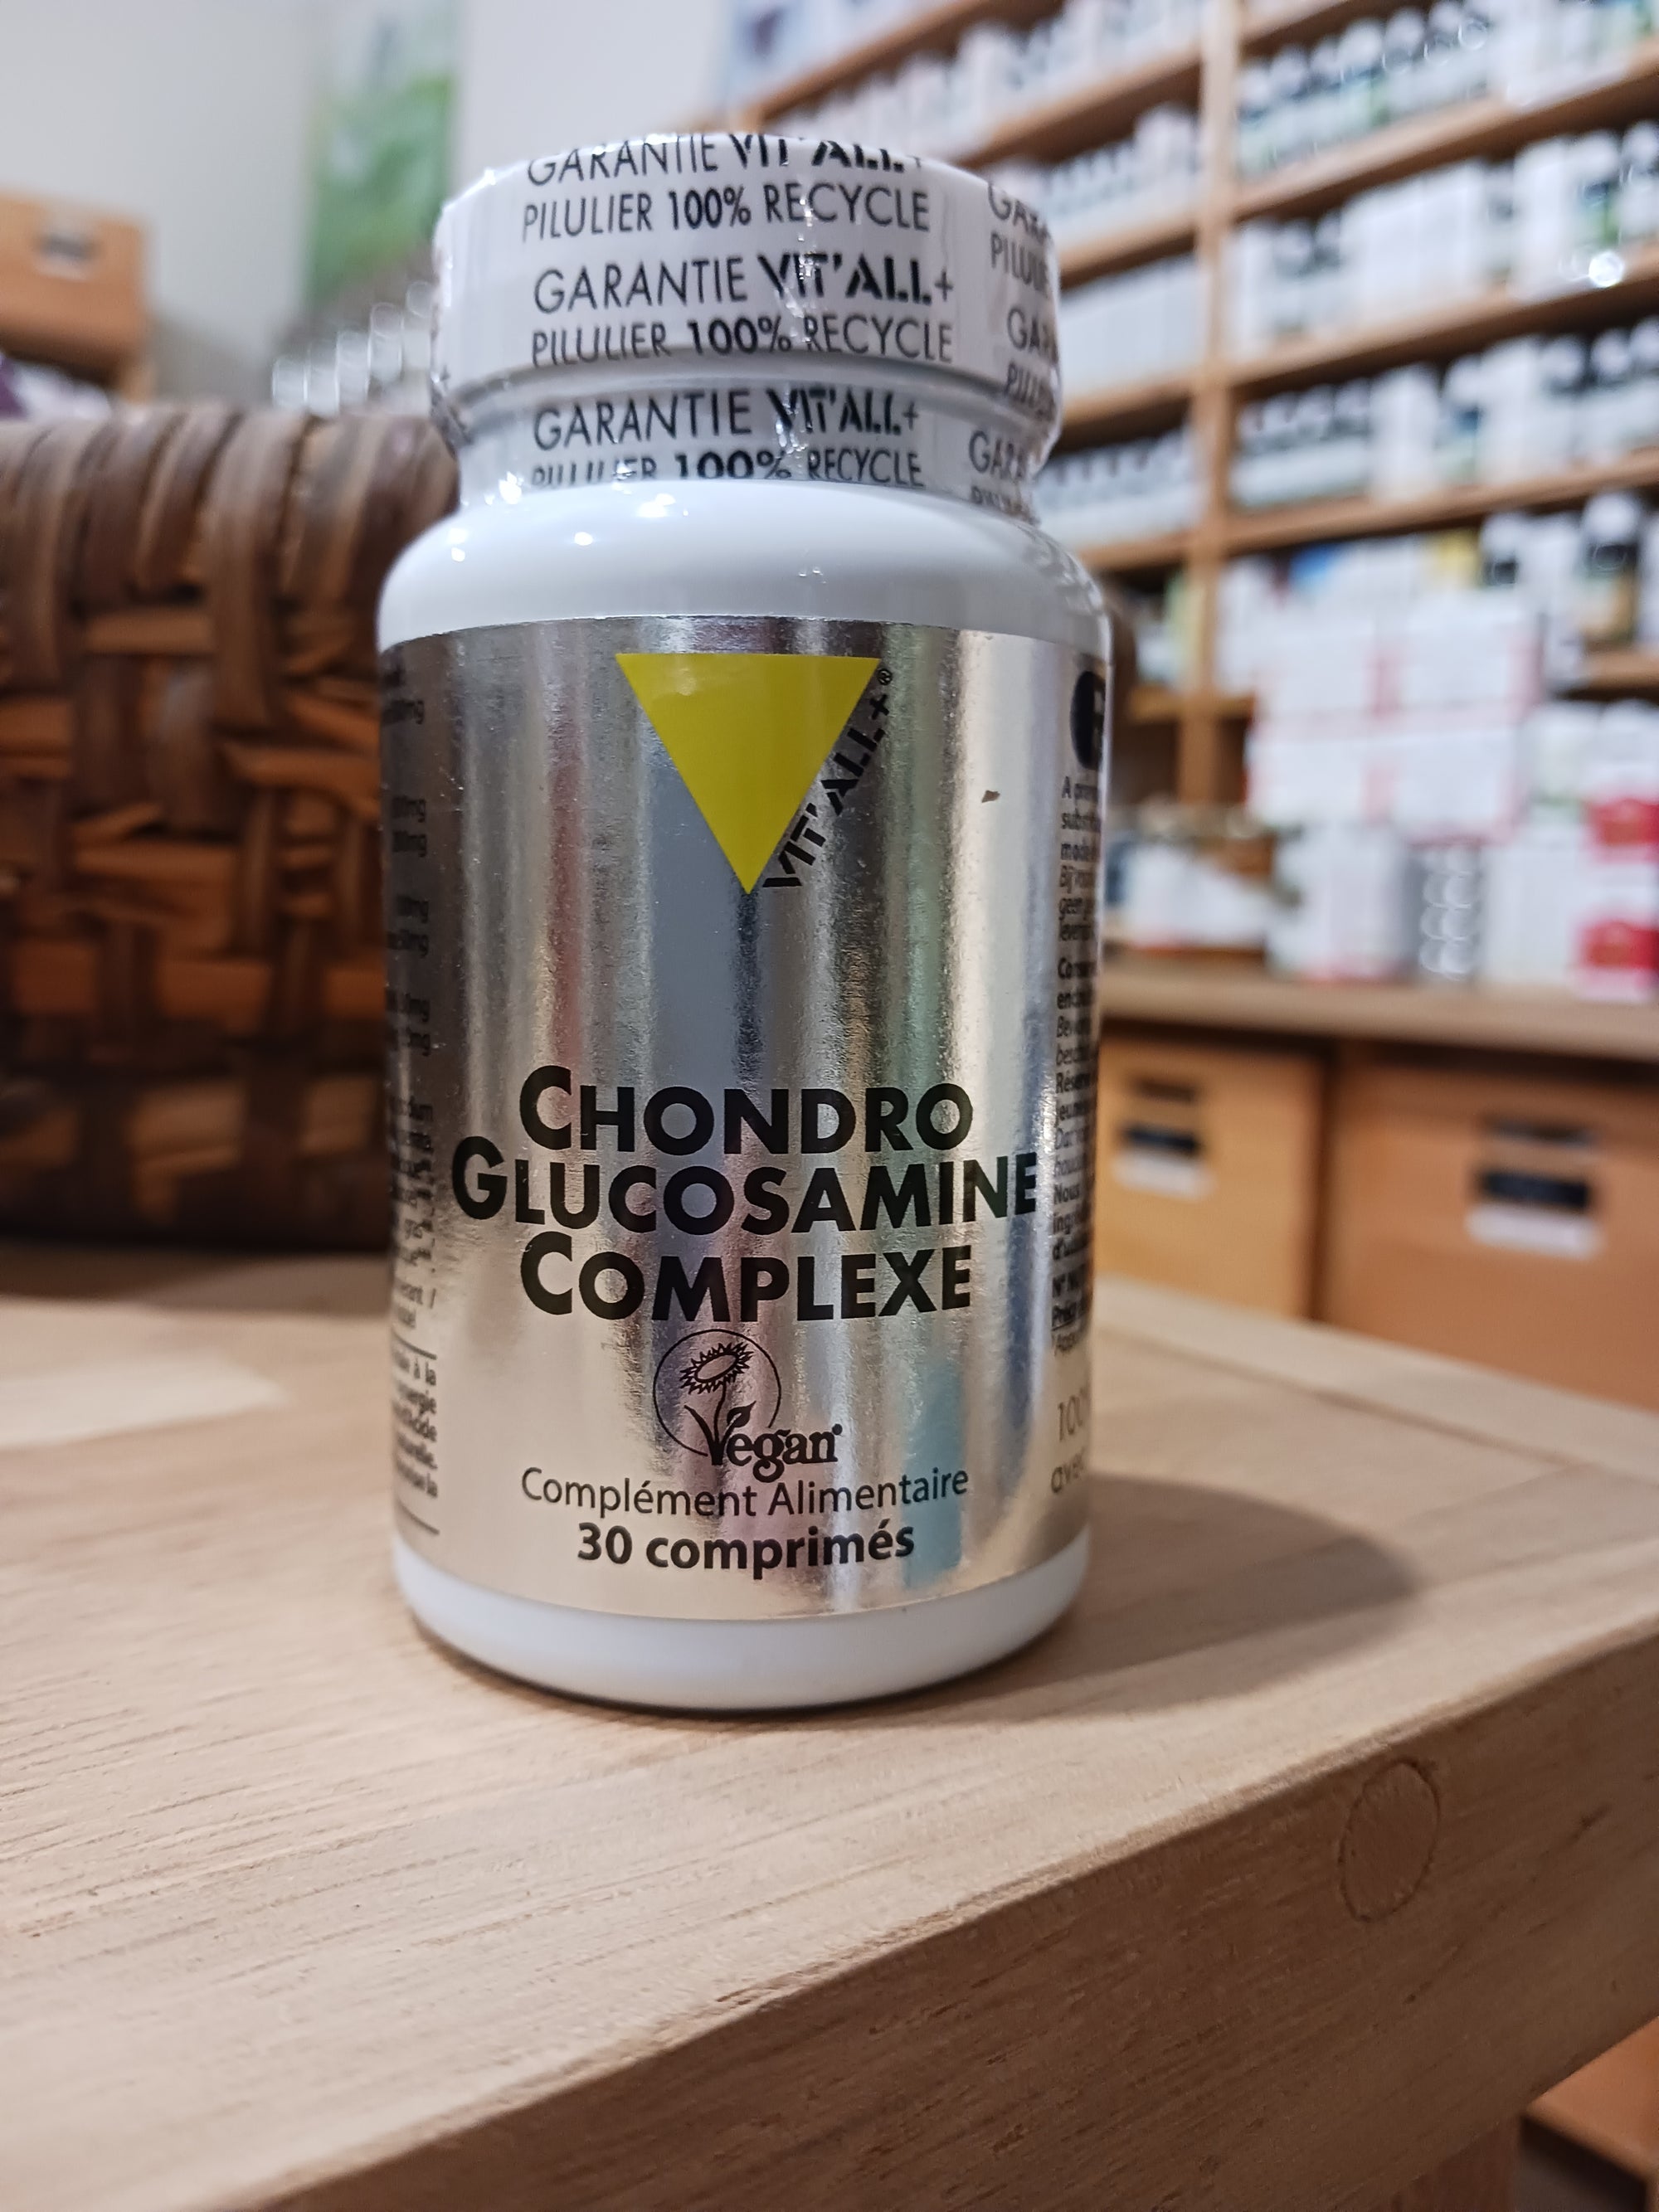 ChondroGlucosamine complexe